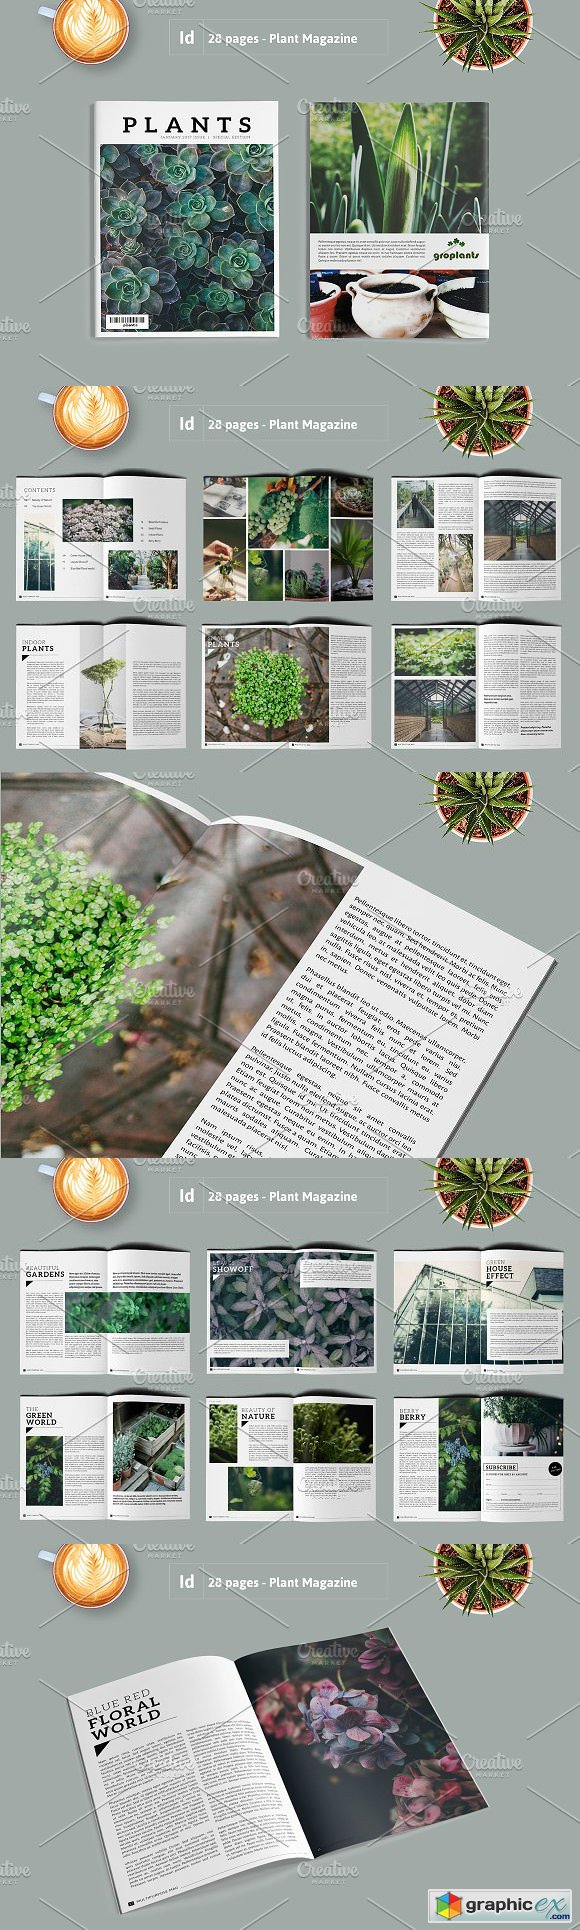 PLANTS Magazine Portfolio